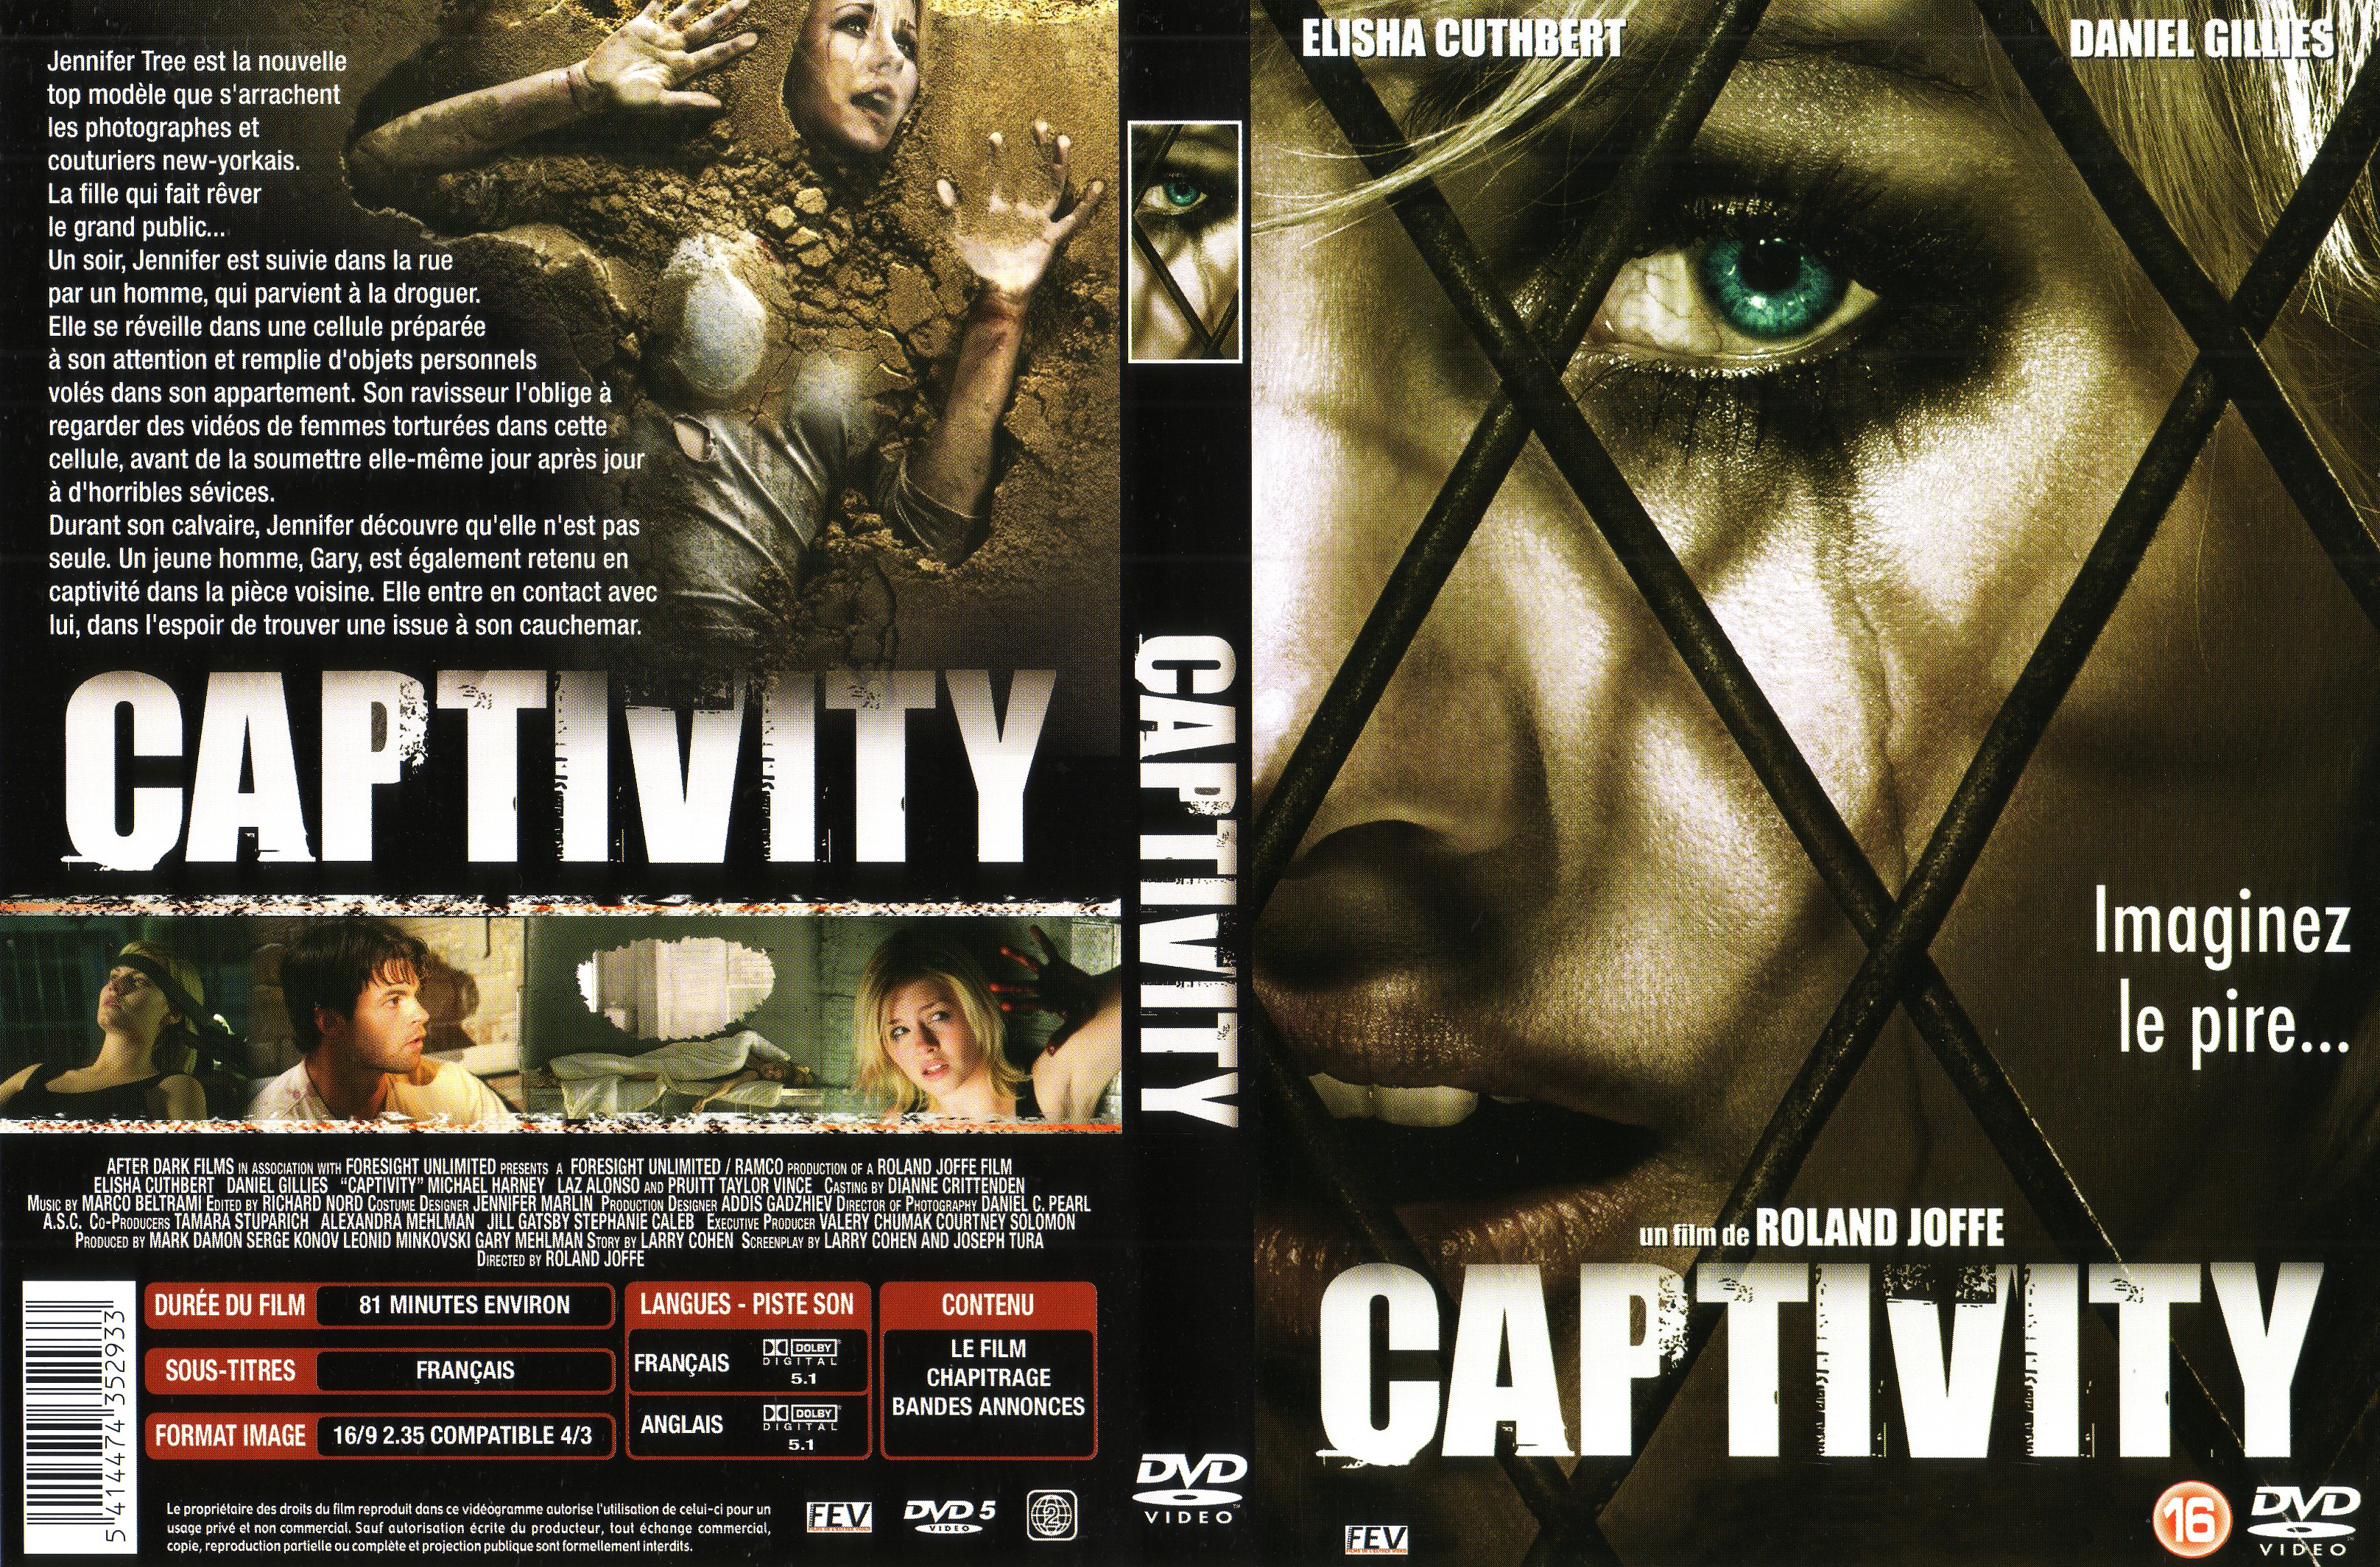 Jaquette DVD Captivity v4